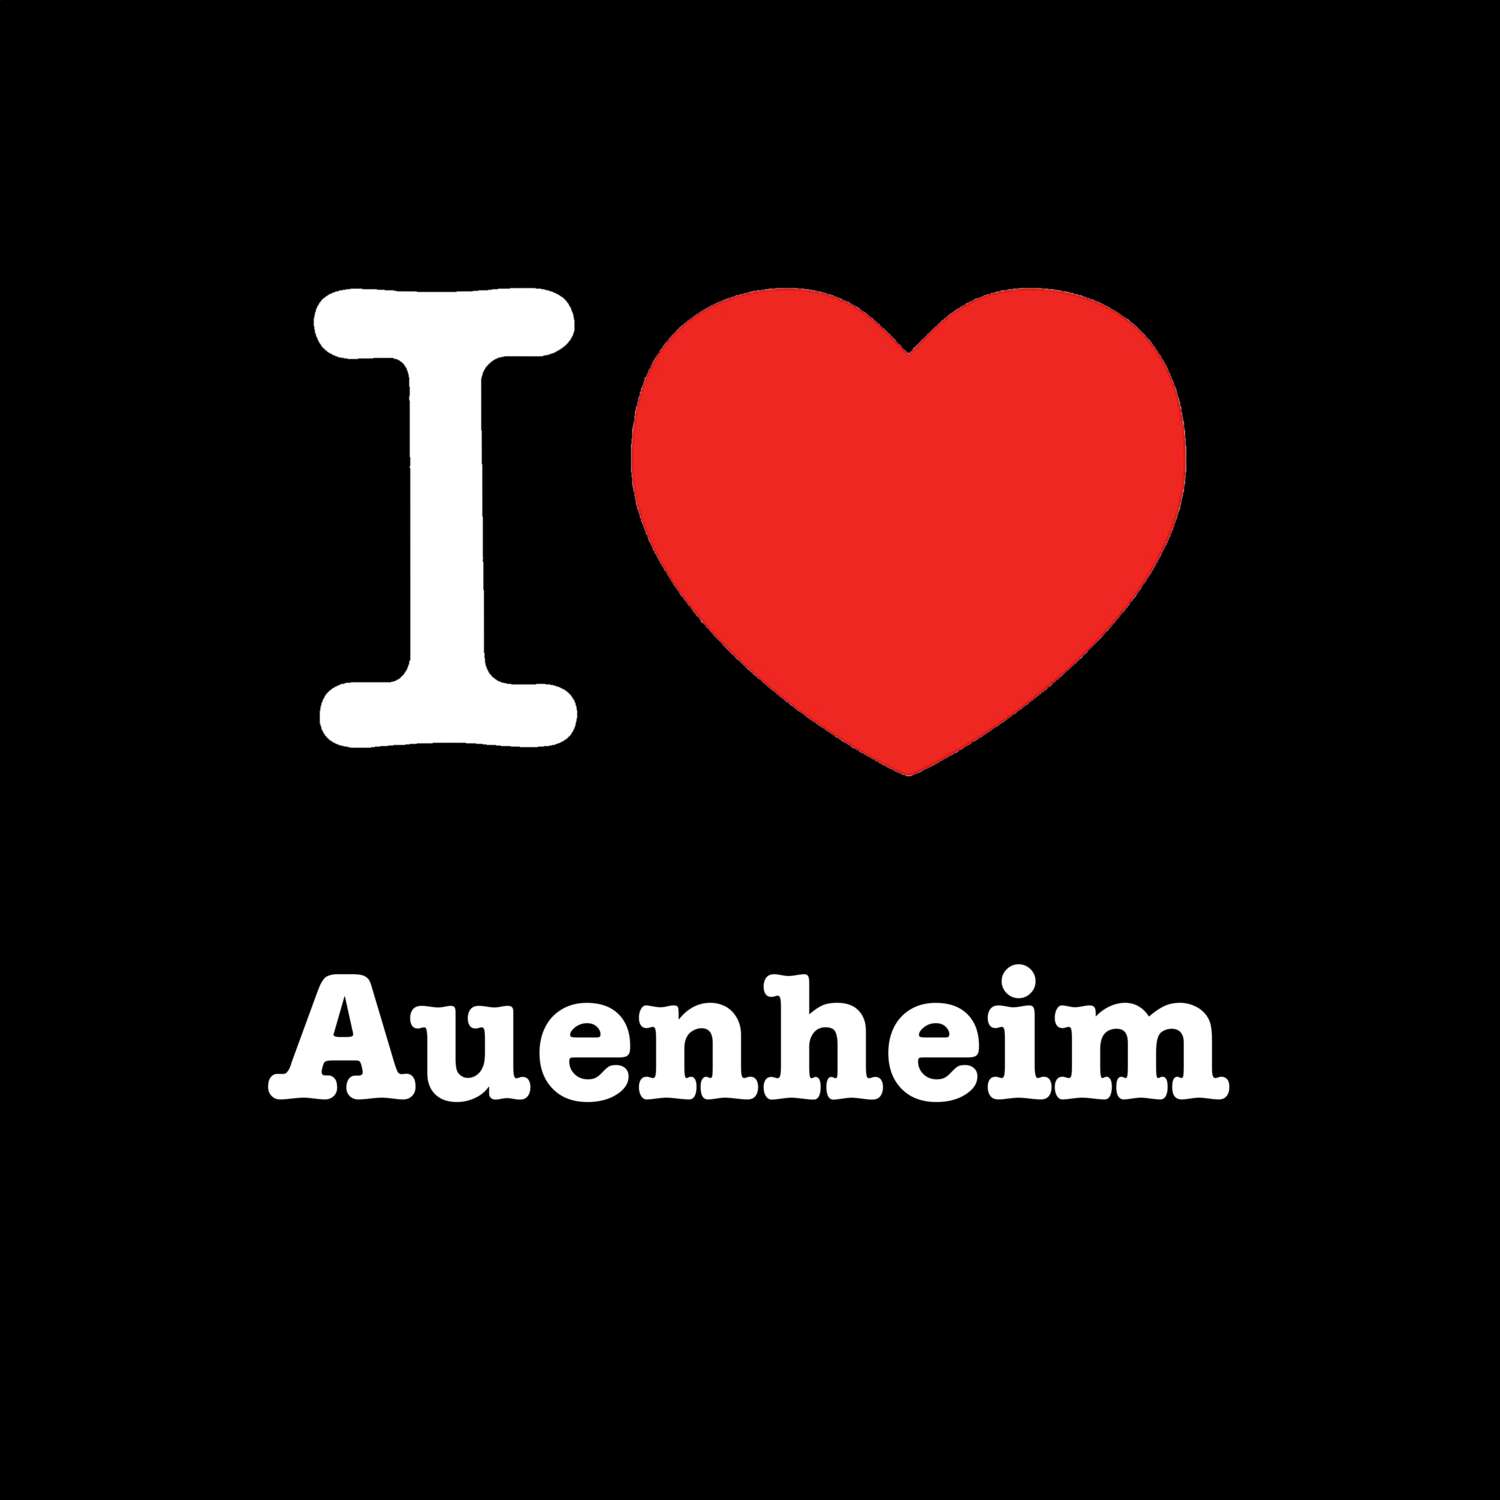 Auenheim T-Shirt »I love«